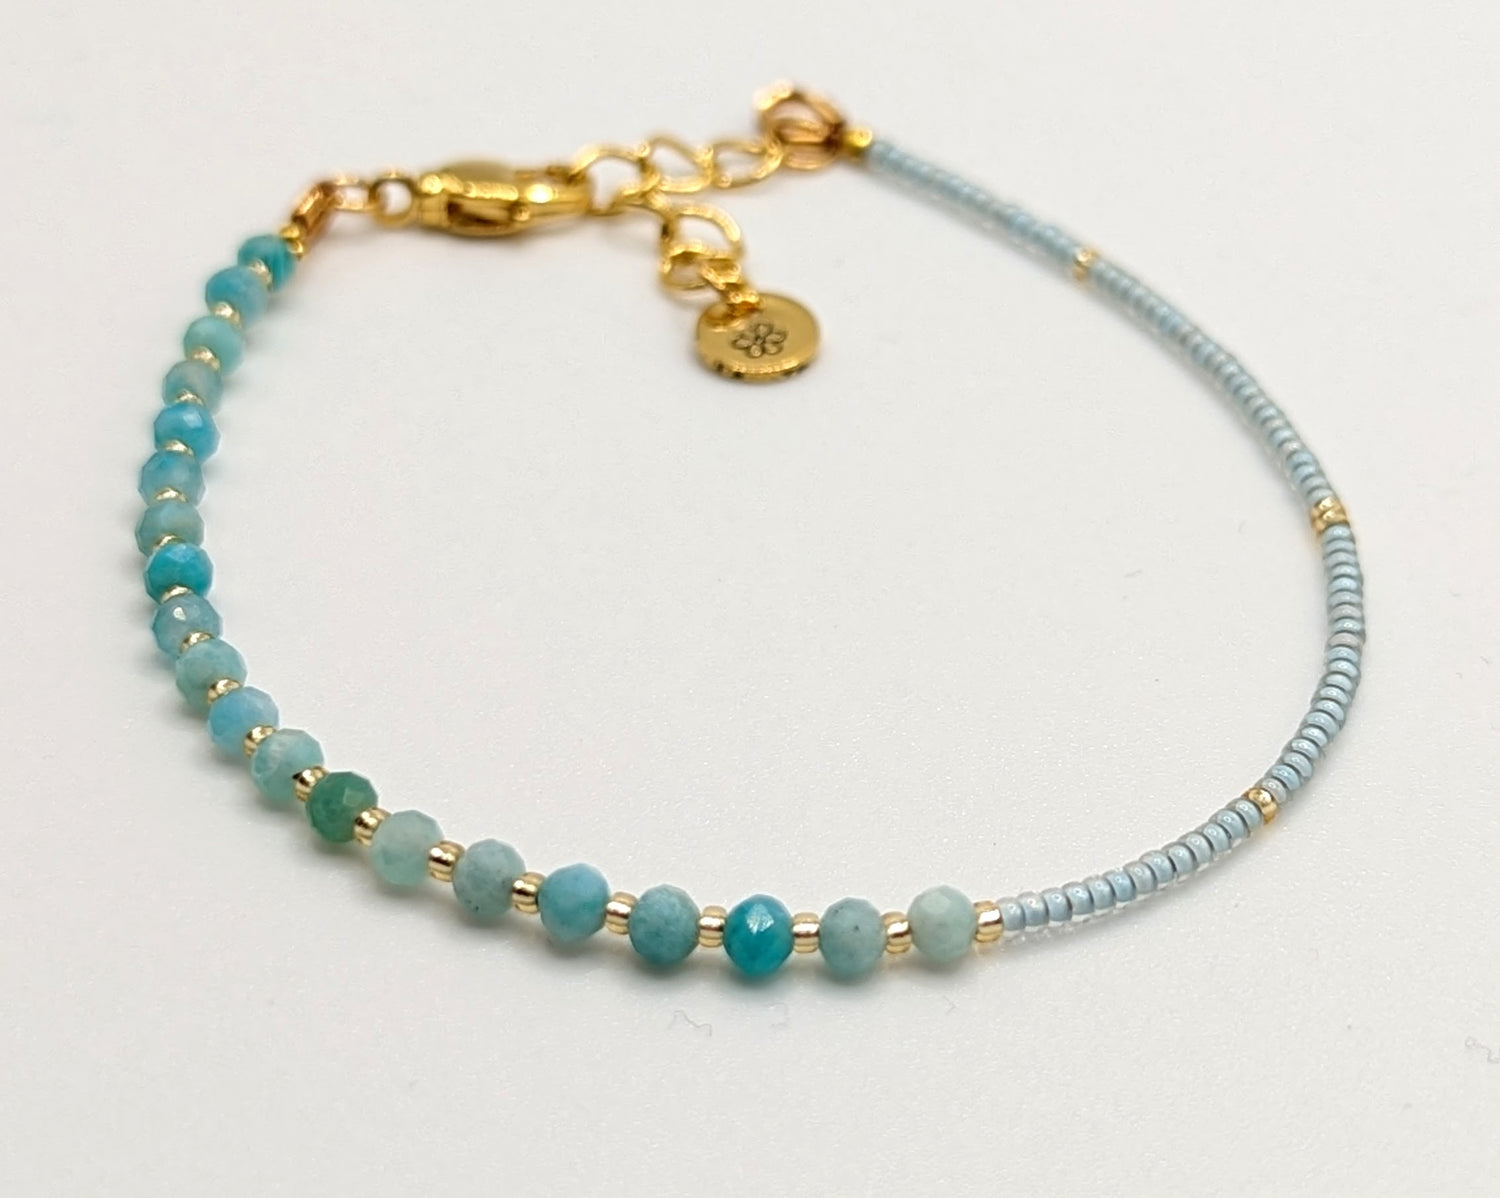 Asymmetrical amazonite and light blue glass seed bead bracelet